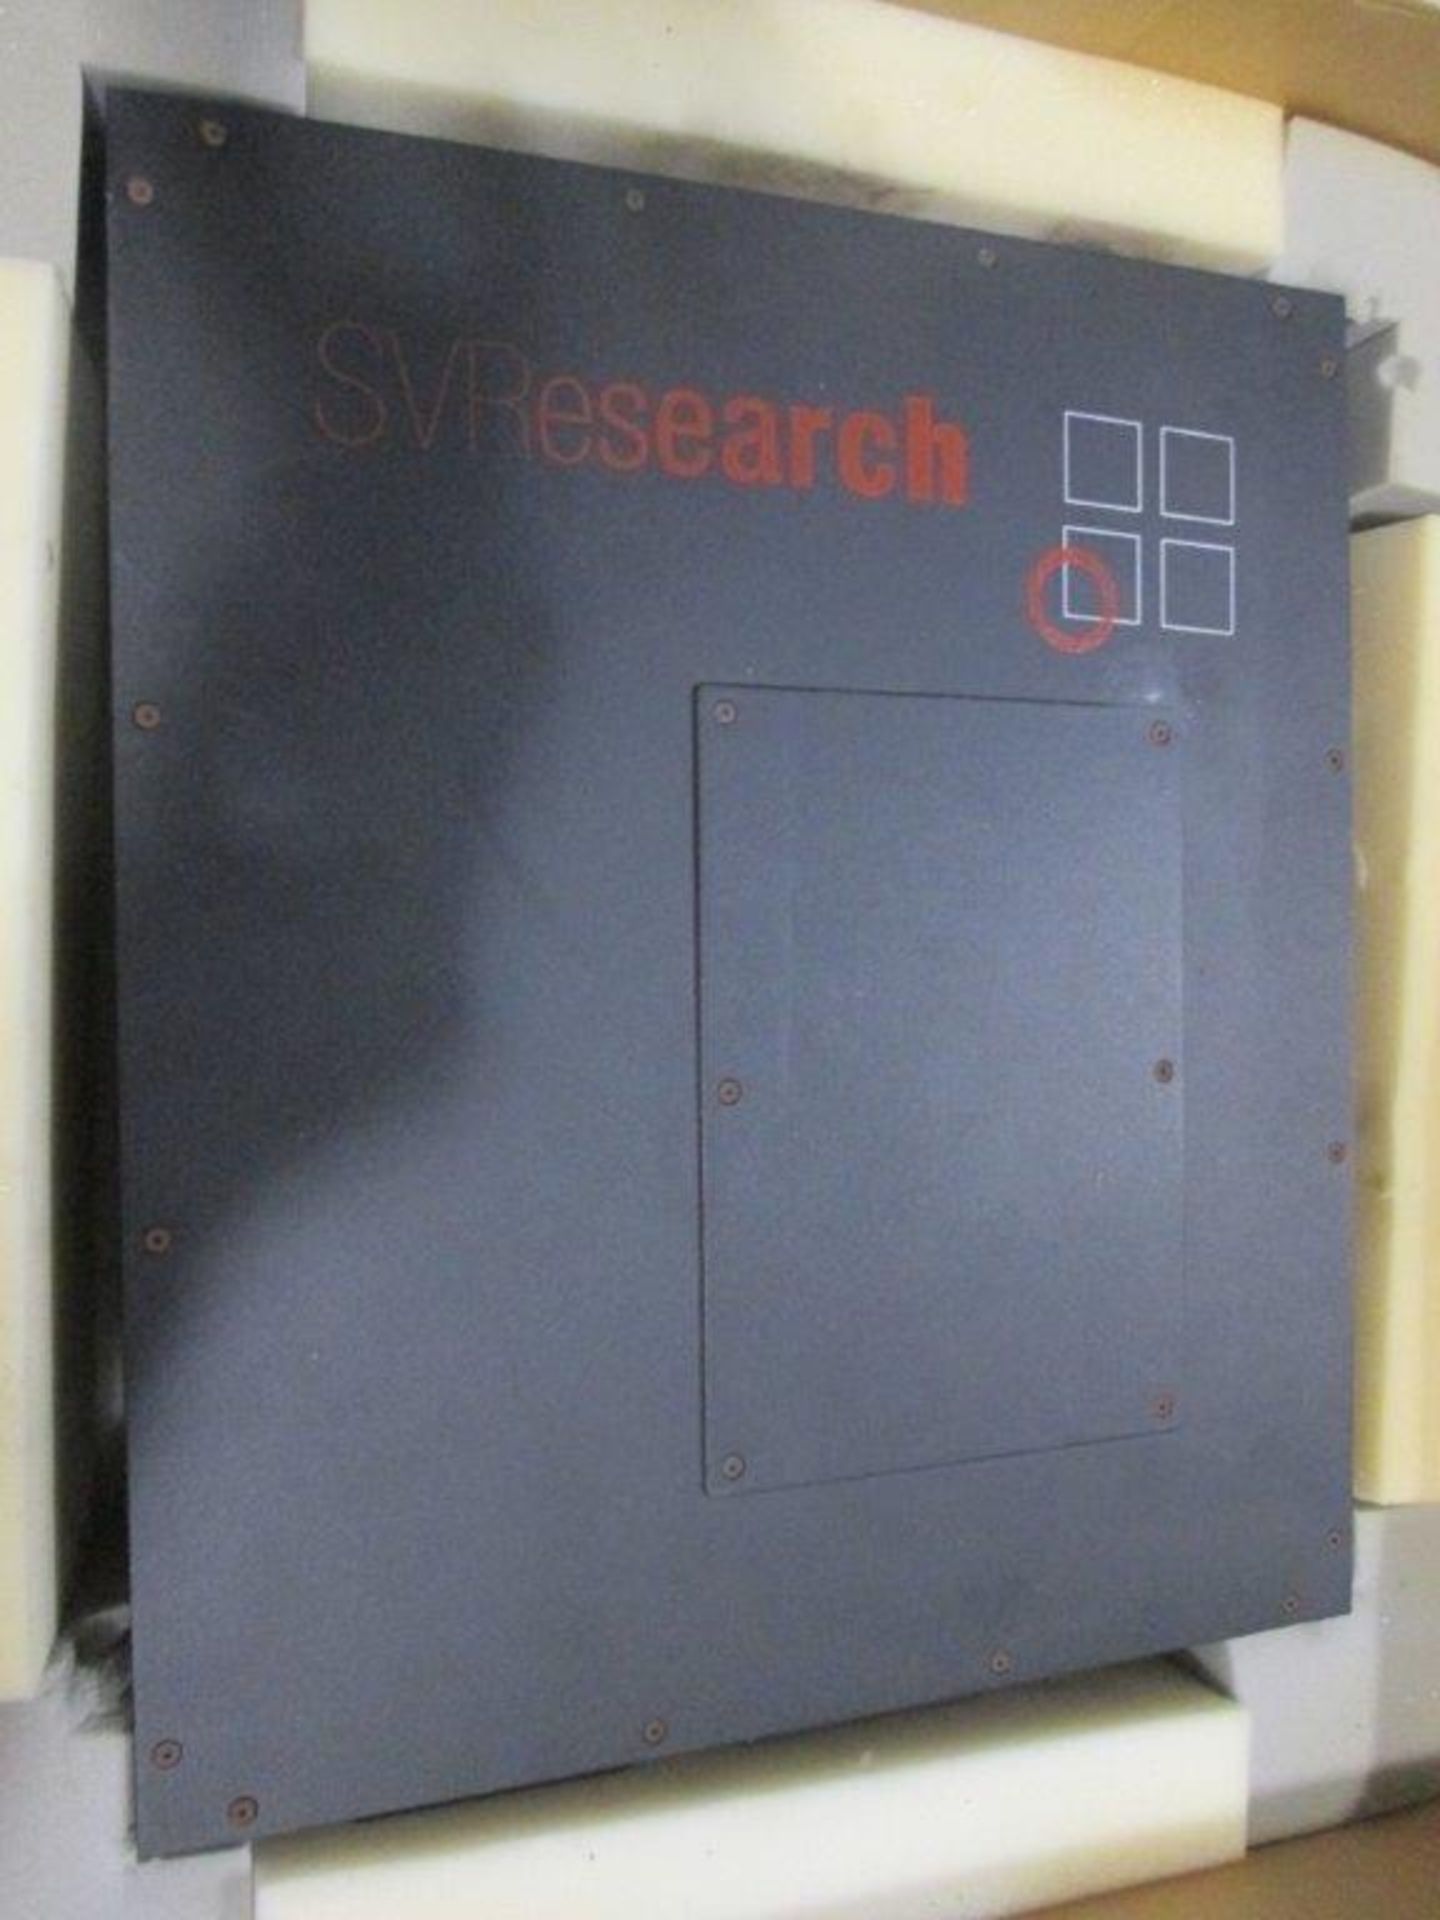 Seidenader LI-40 Automatic Vial Inspection Machine - Image 16 of 16